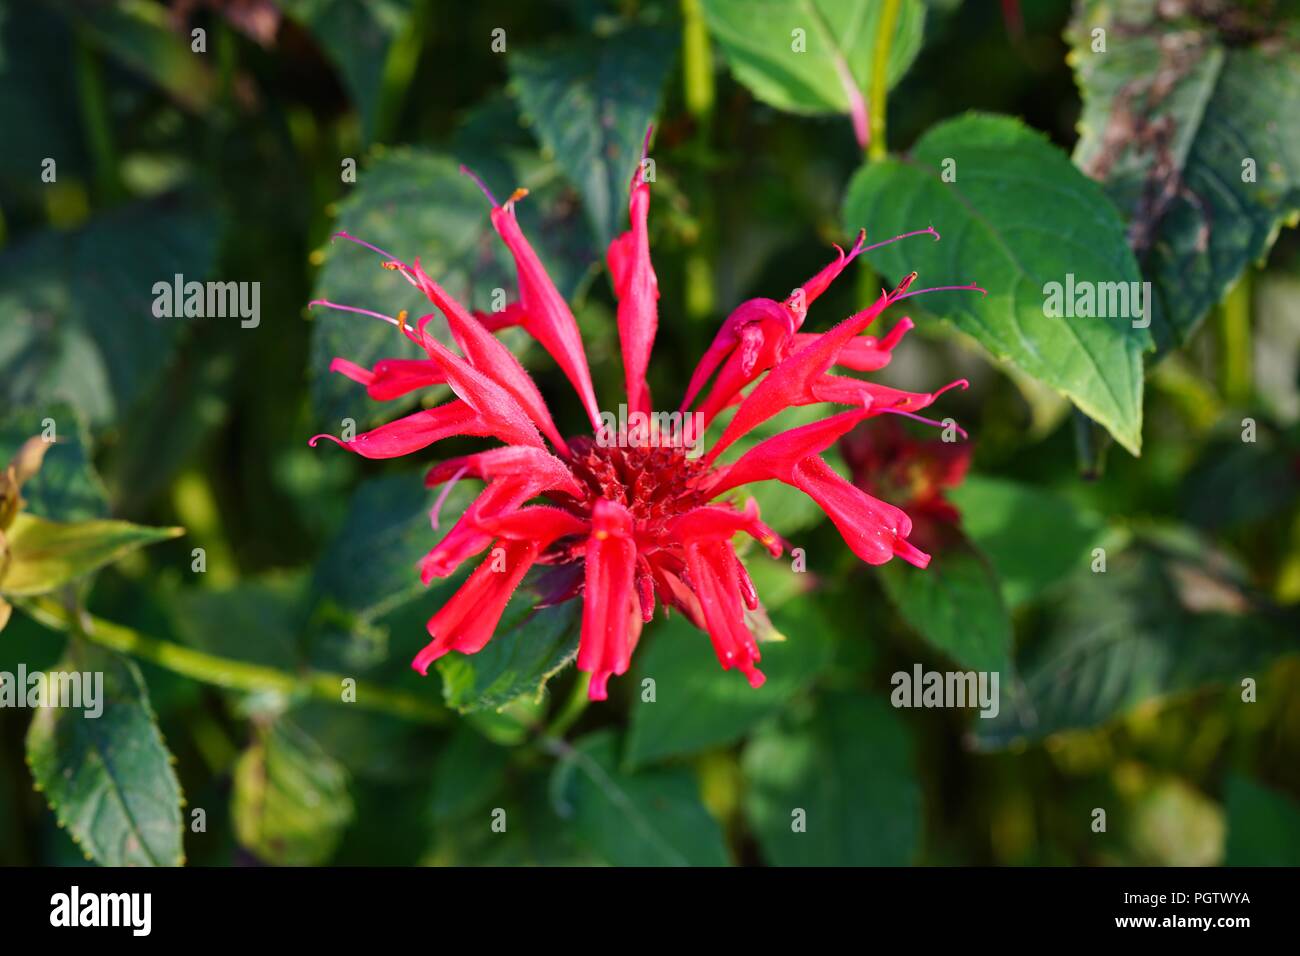 Red flowers of bee balm monarda Stock Photo